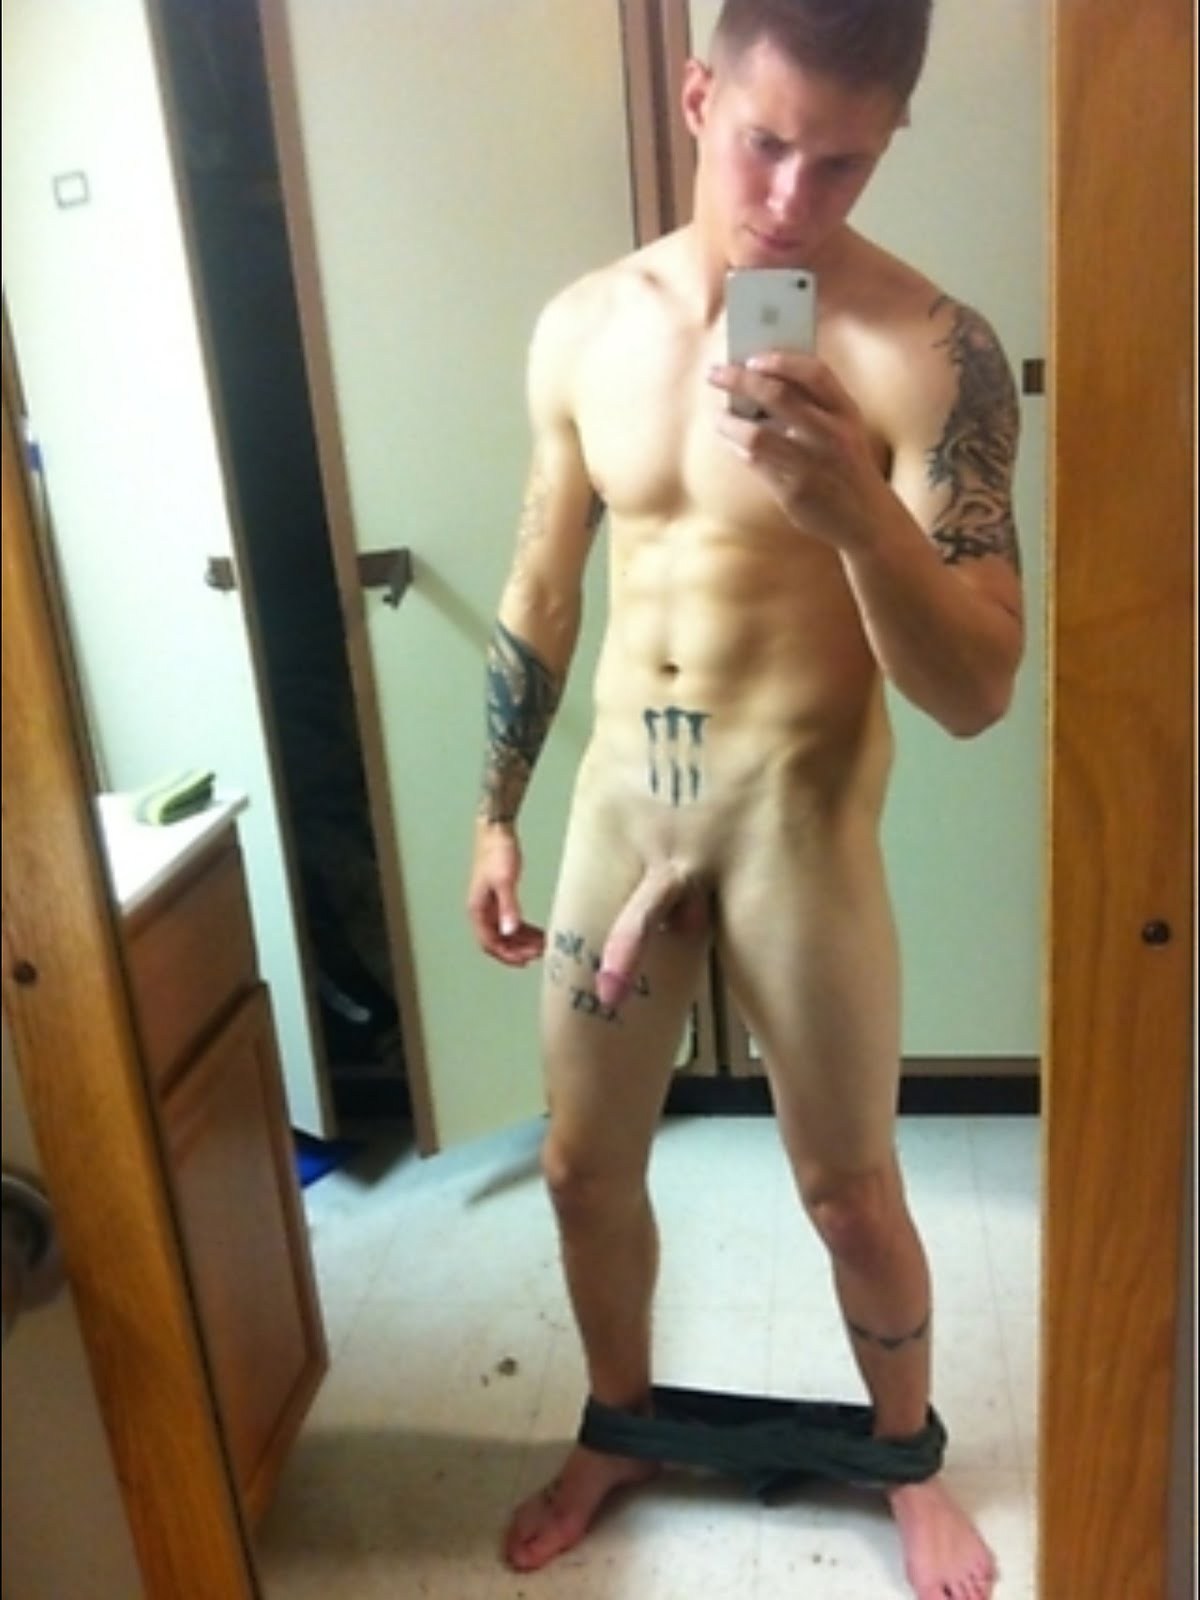 Naked Guy Mirror Selfie No Face Long Xxx